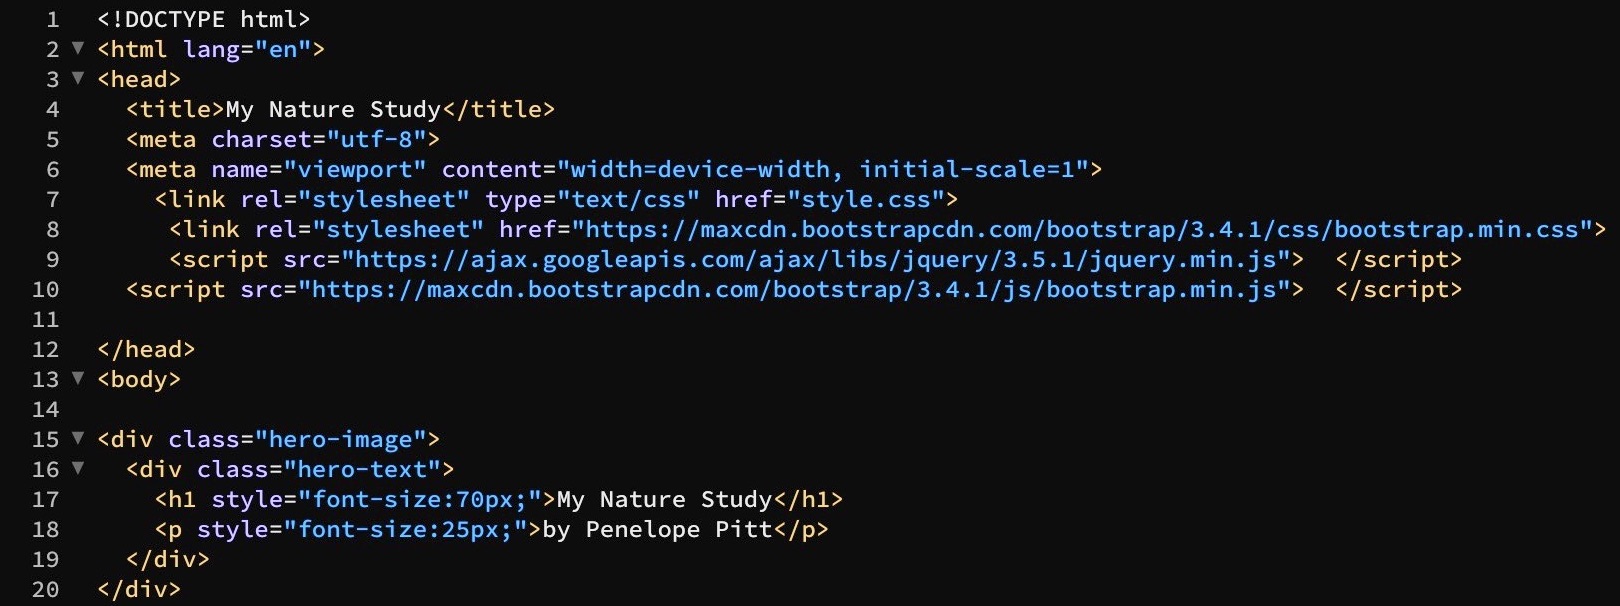 cropped screenshot of HTML code